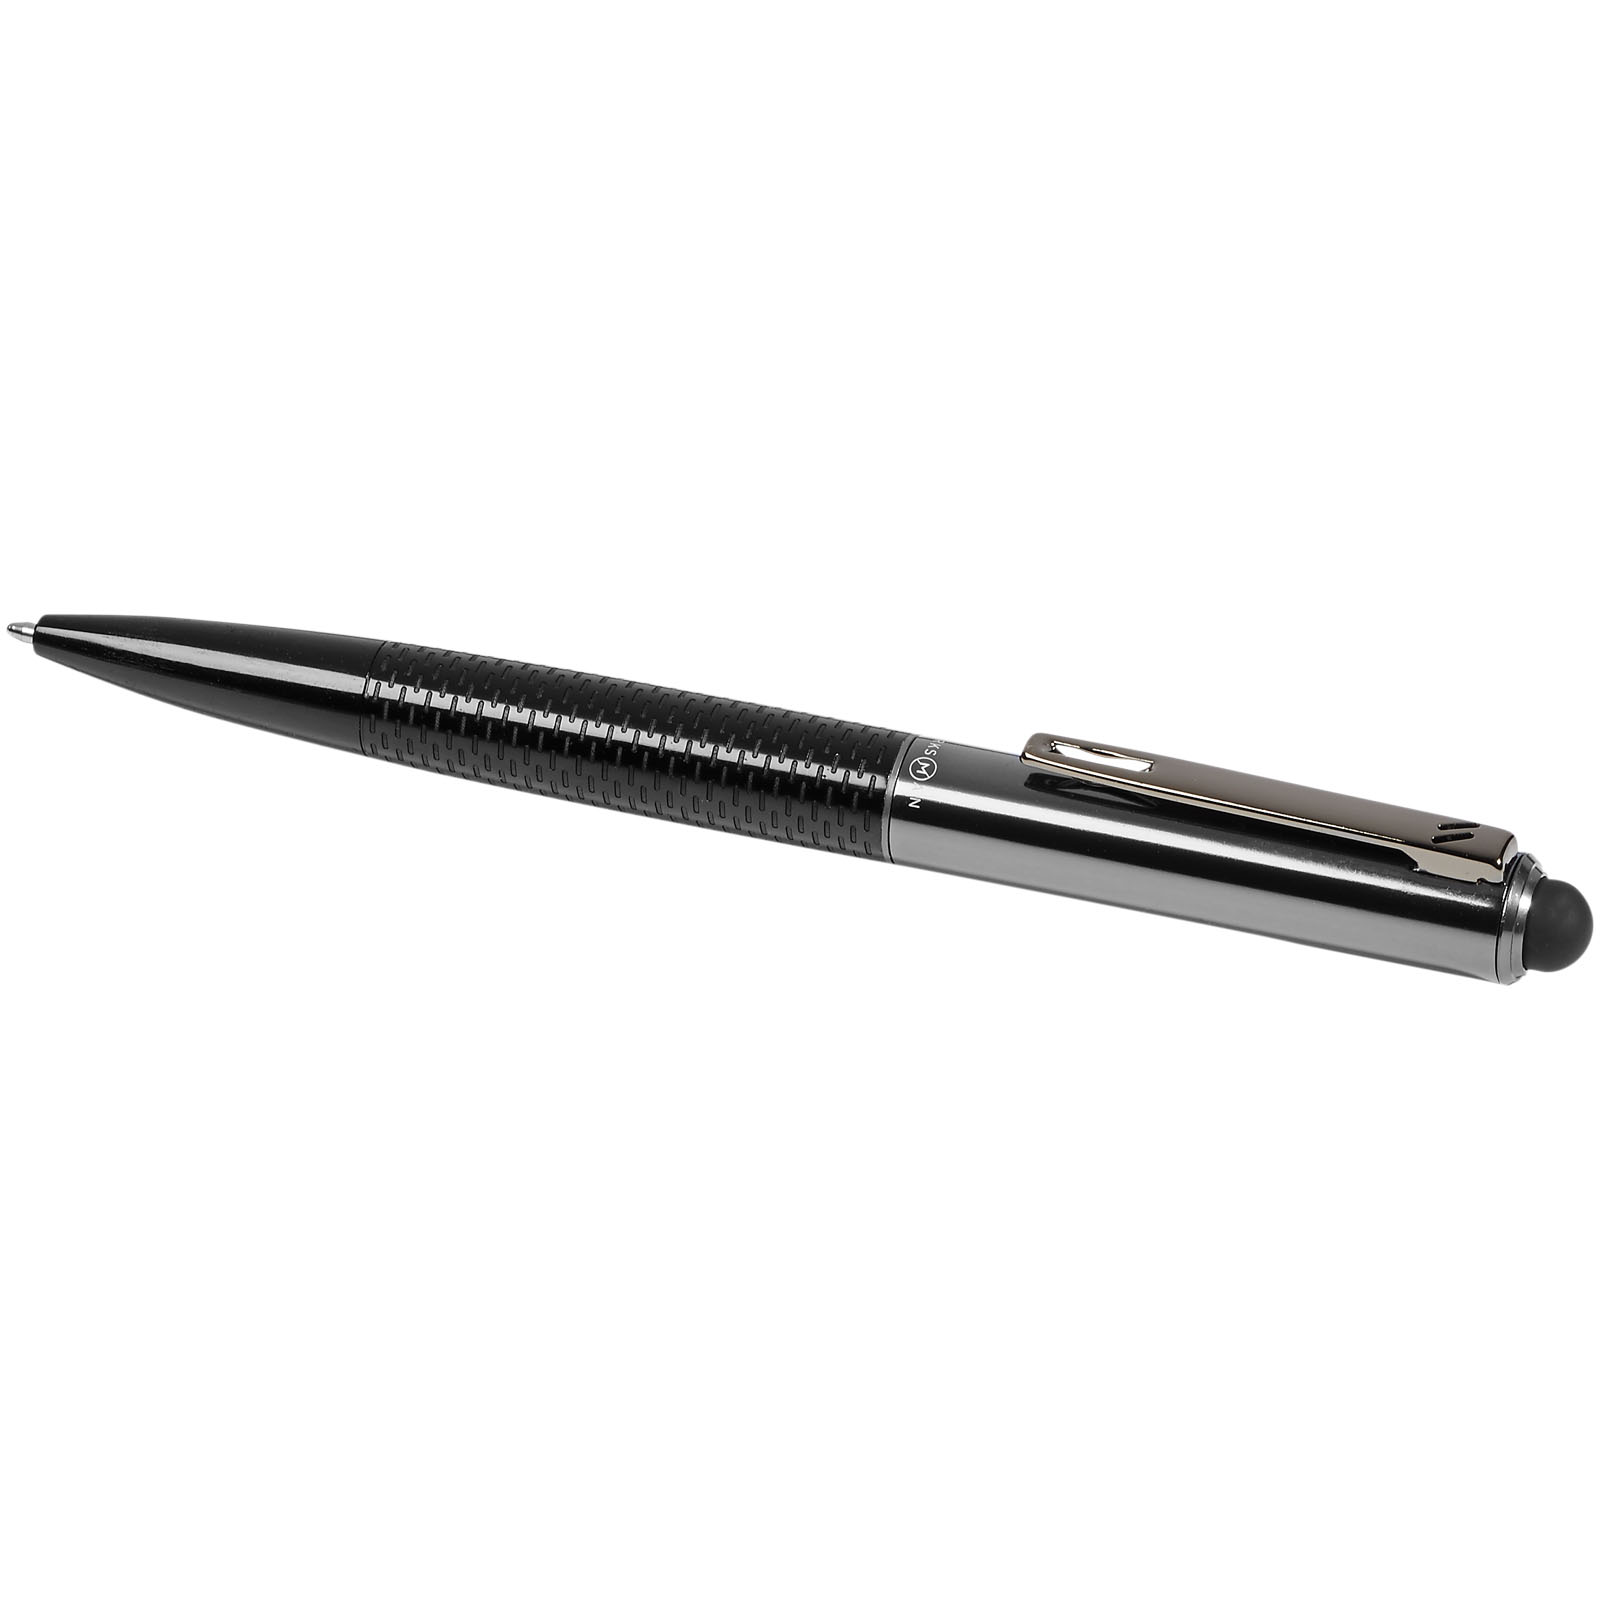 Advertising Ballpoint Pens - Dash stylus ballpoint pen - 4